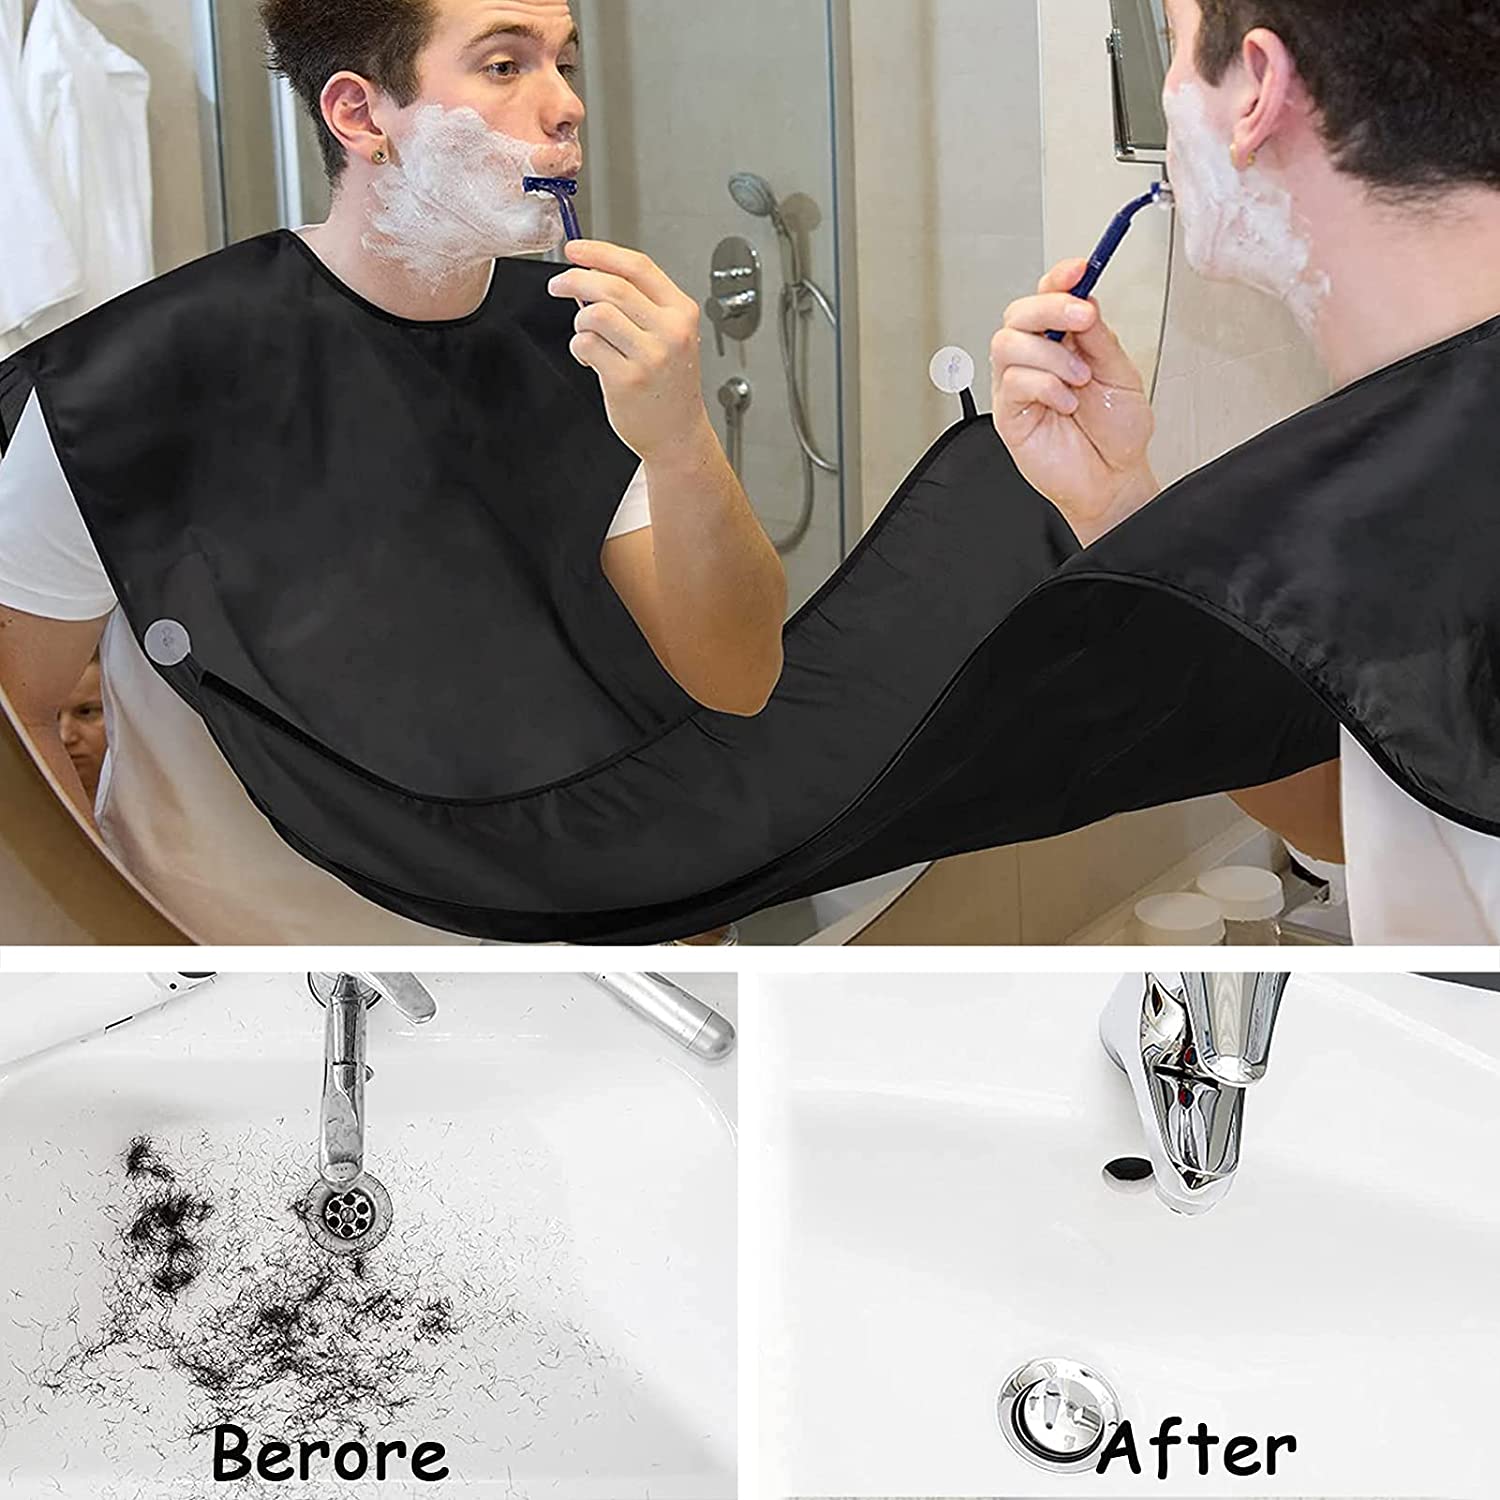 FREE - Beard King Bib Beard Apron, Beard Hair Catcher for Men Shaving & Trimming.